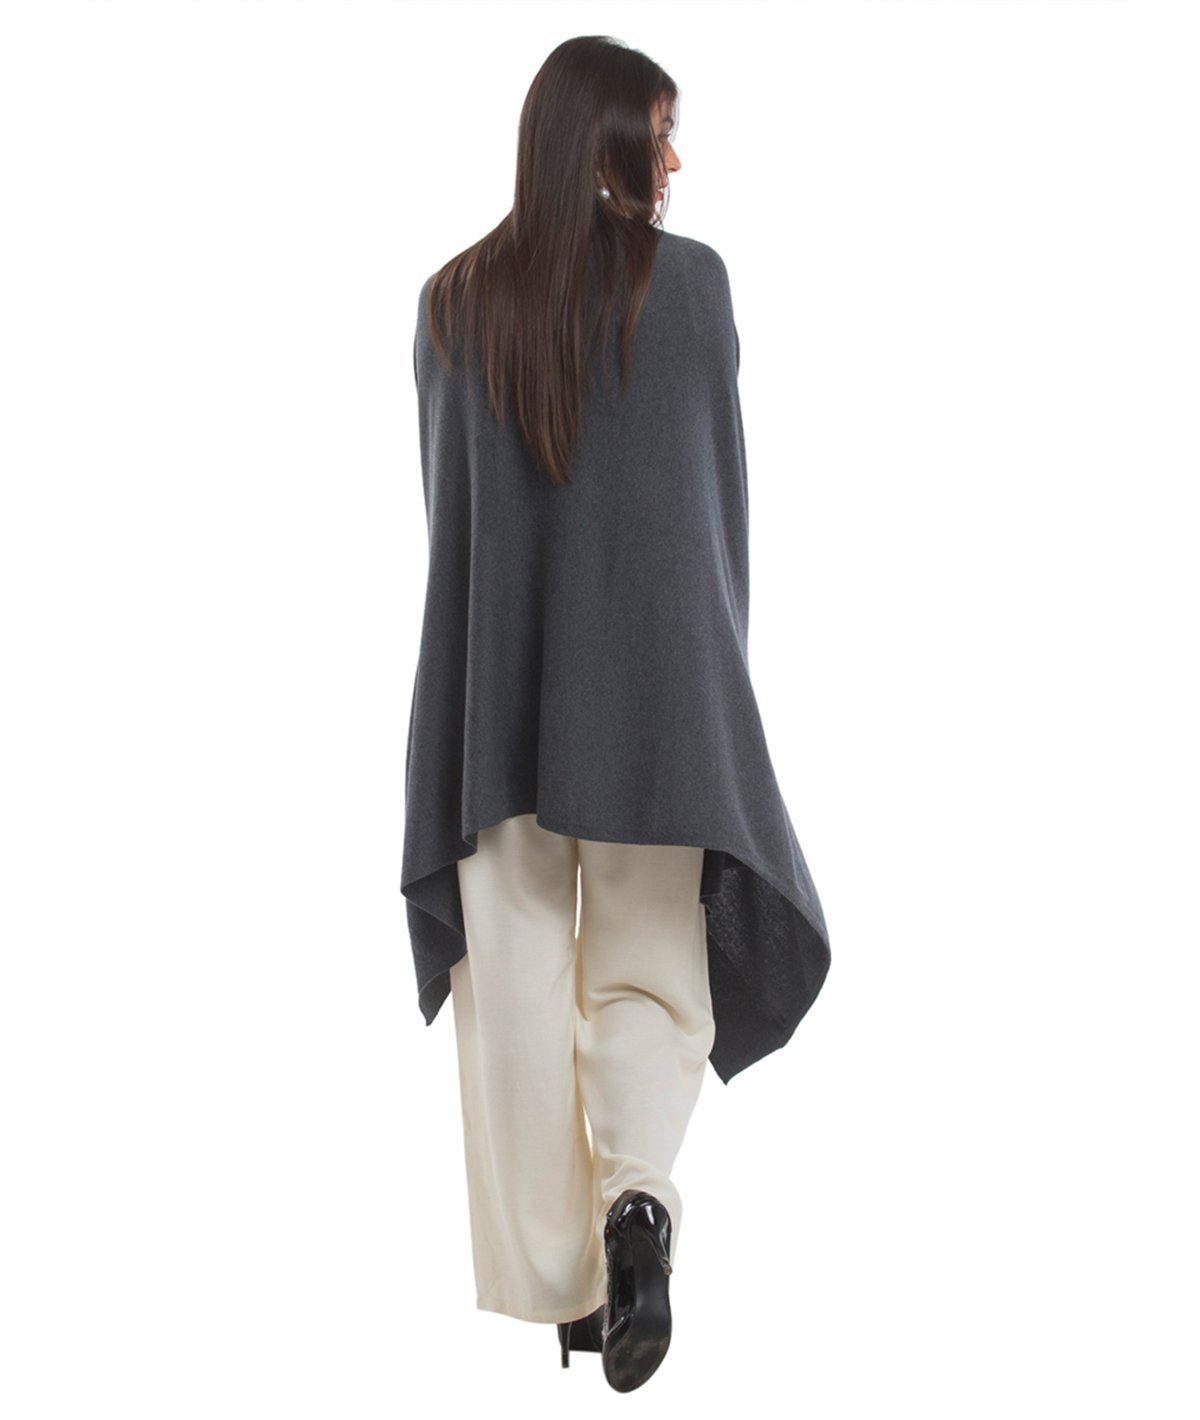 Palma - Dark Grey Cotton Knitted Fashion Poncho / Top / Cape